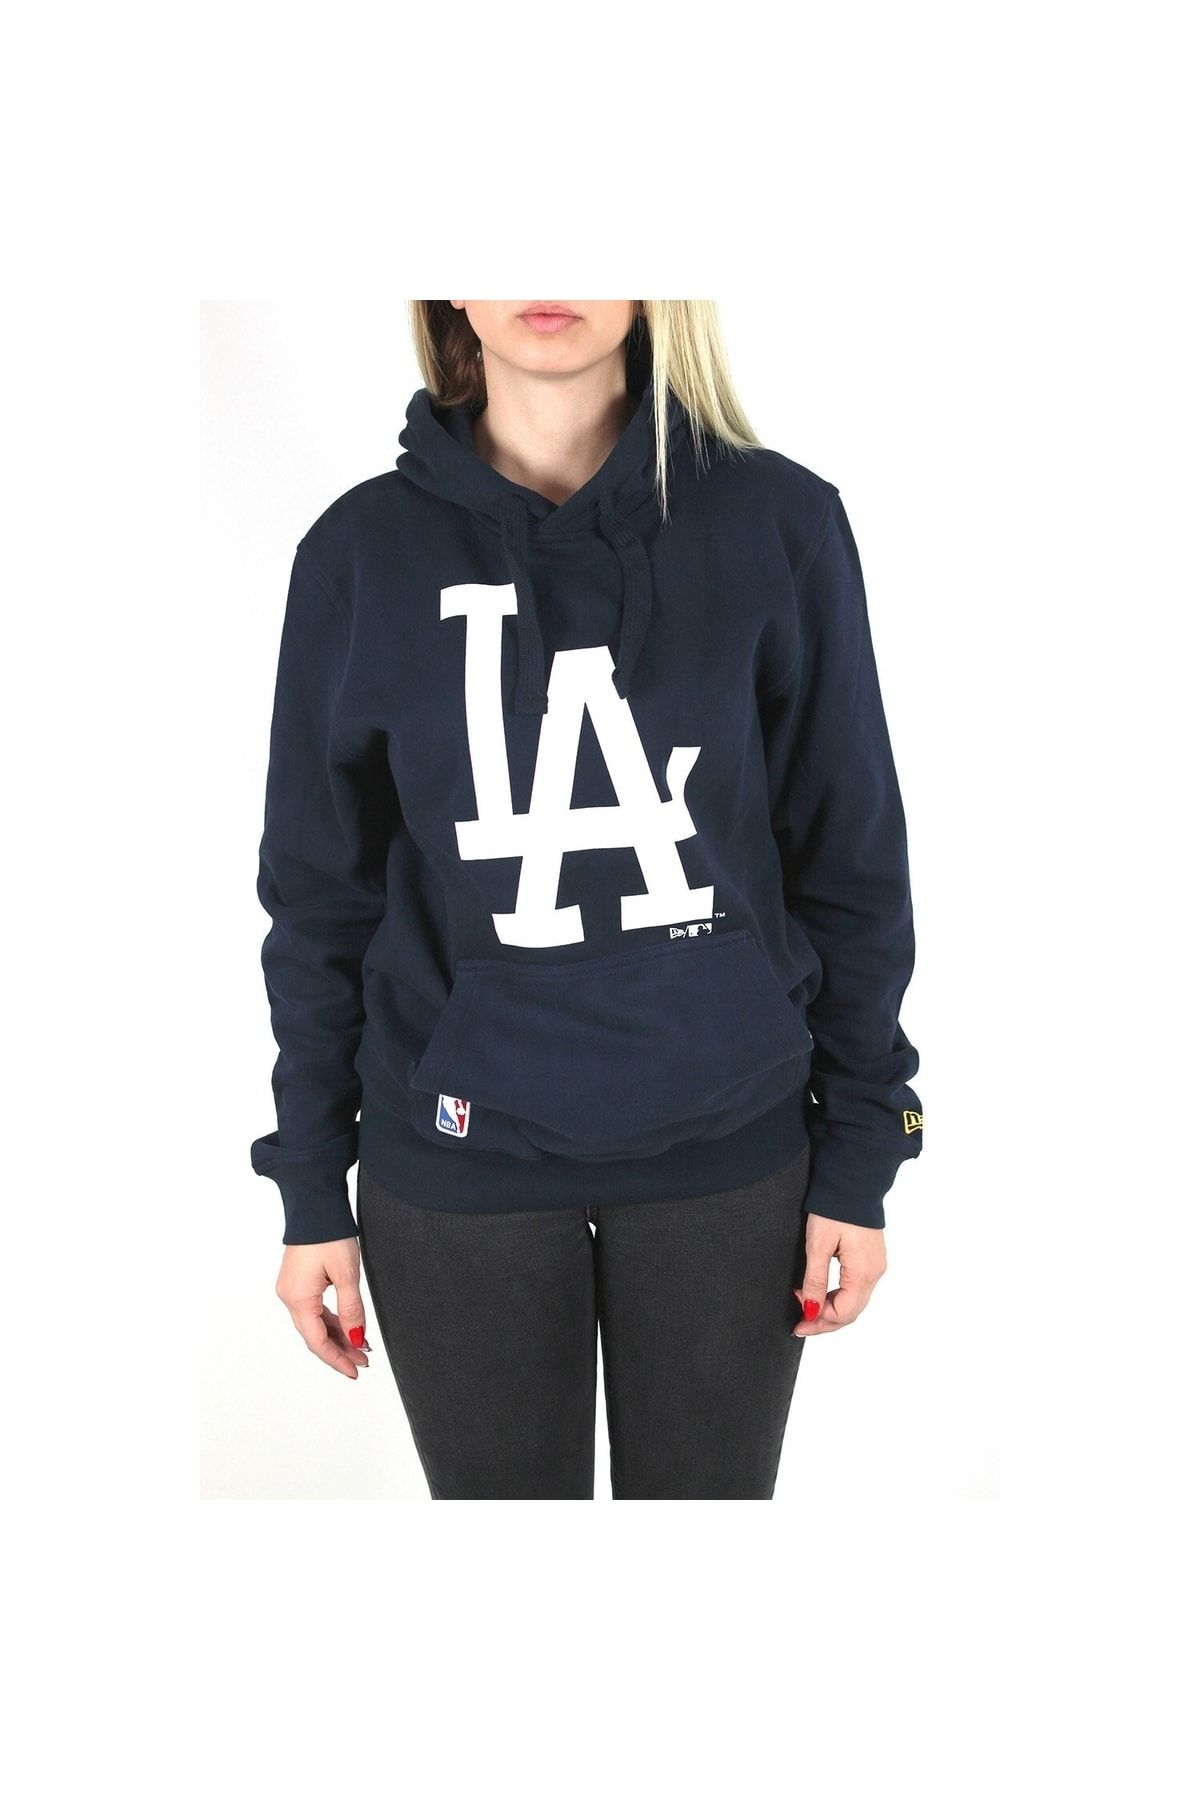 NEW ERA L.a. Dodgers Hoody Erkek Sweatshirt